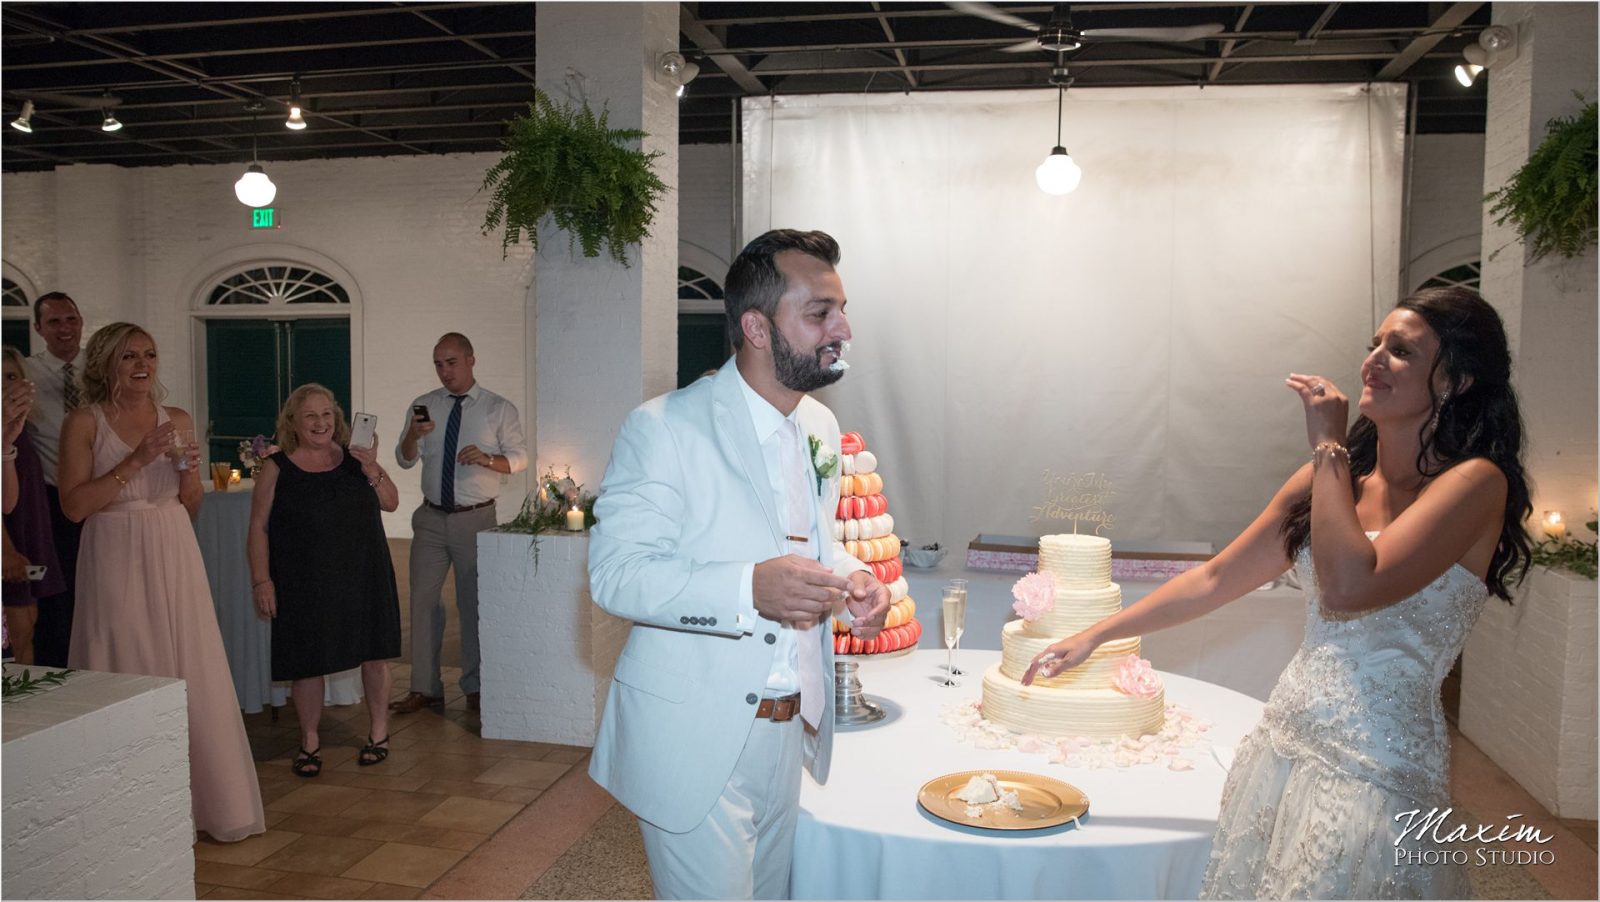 Moonlight Gardens Coney Island Wedding Reception cake cutting